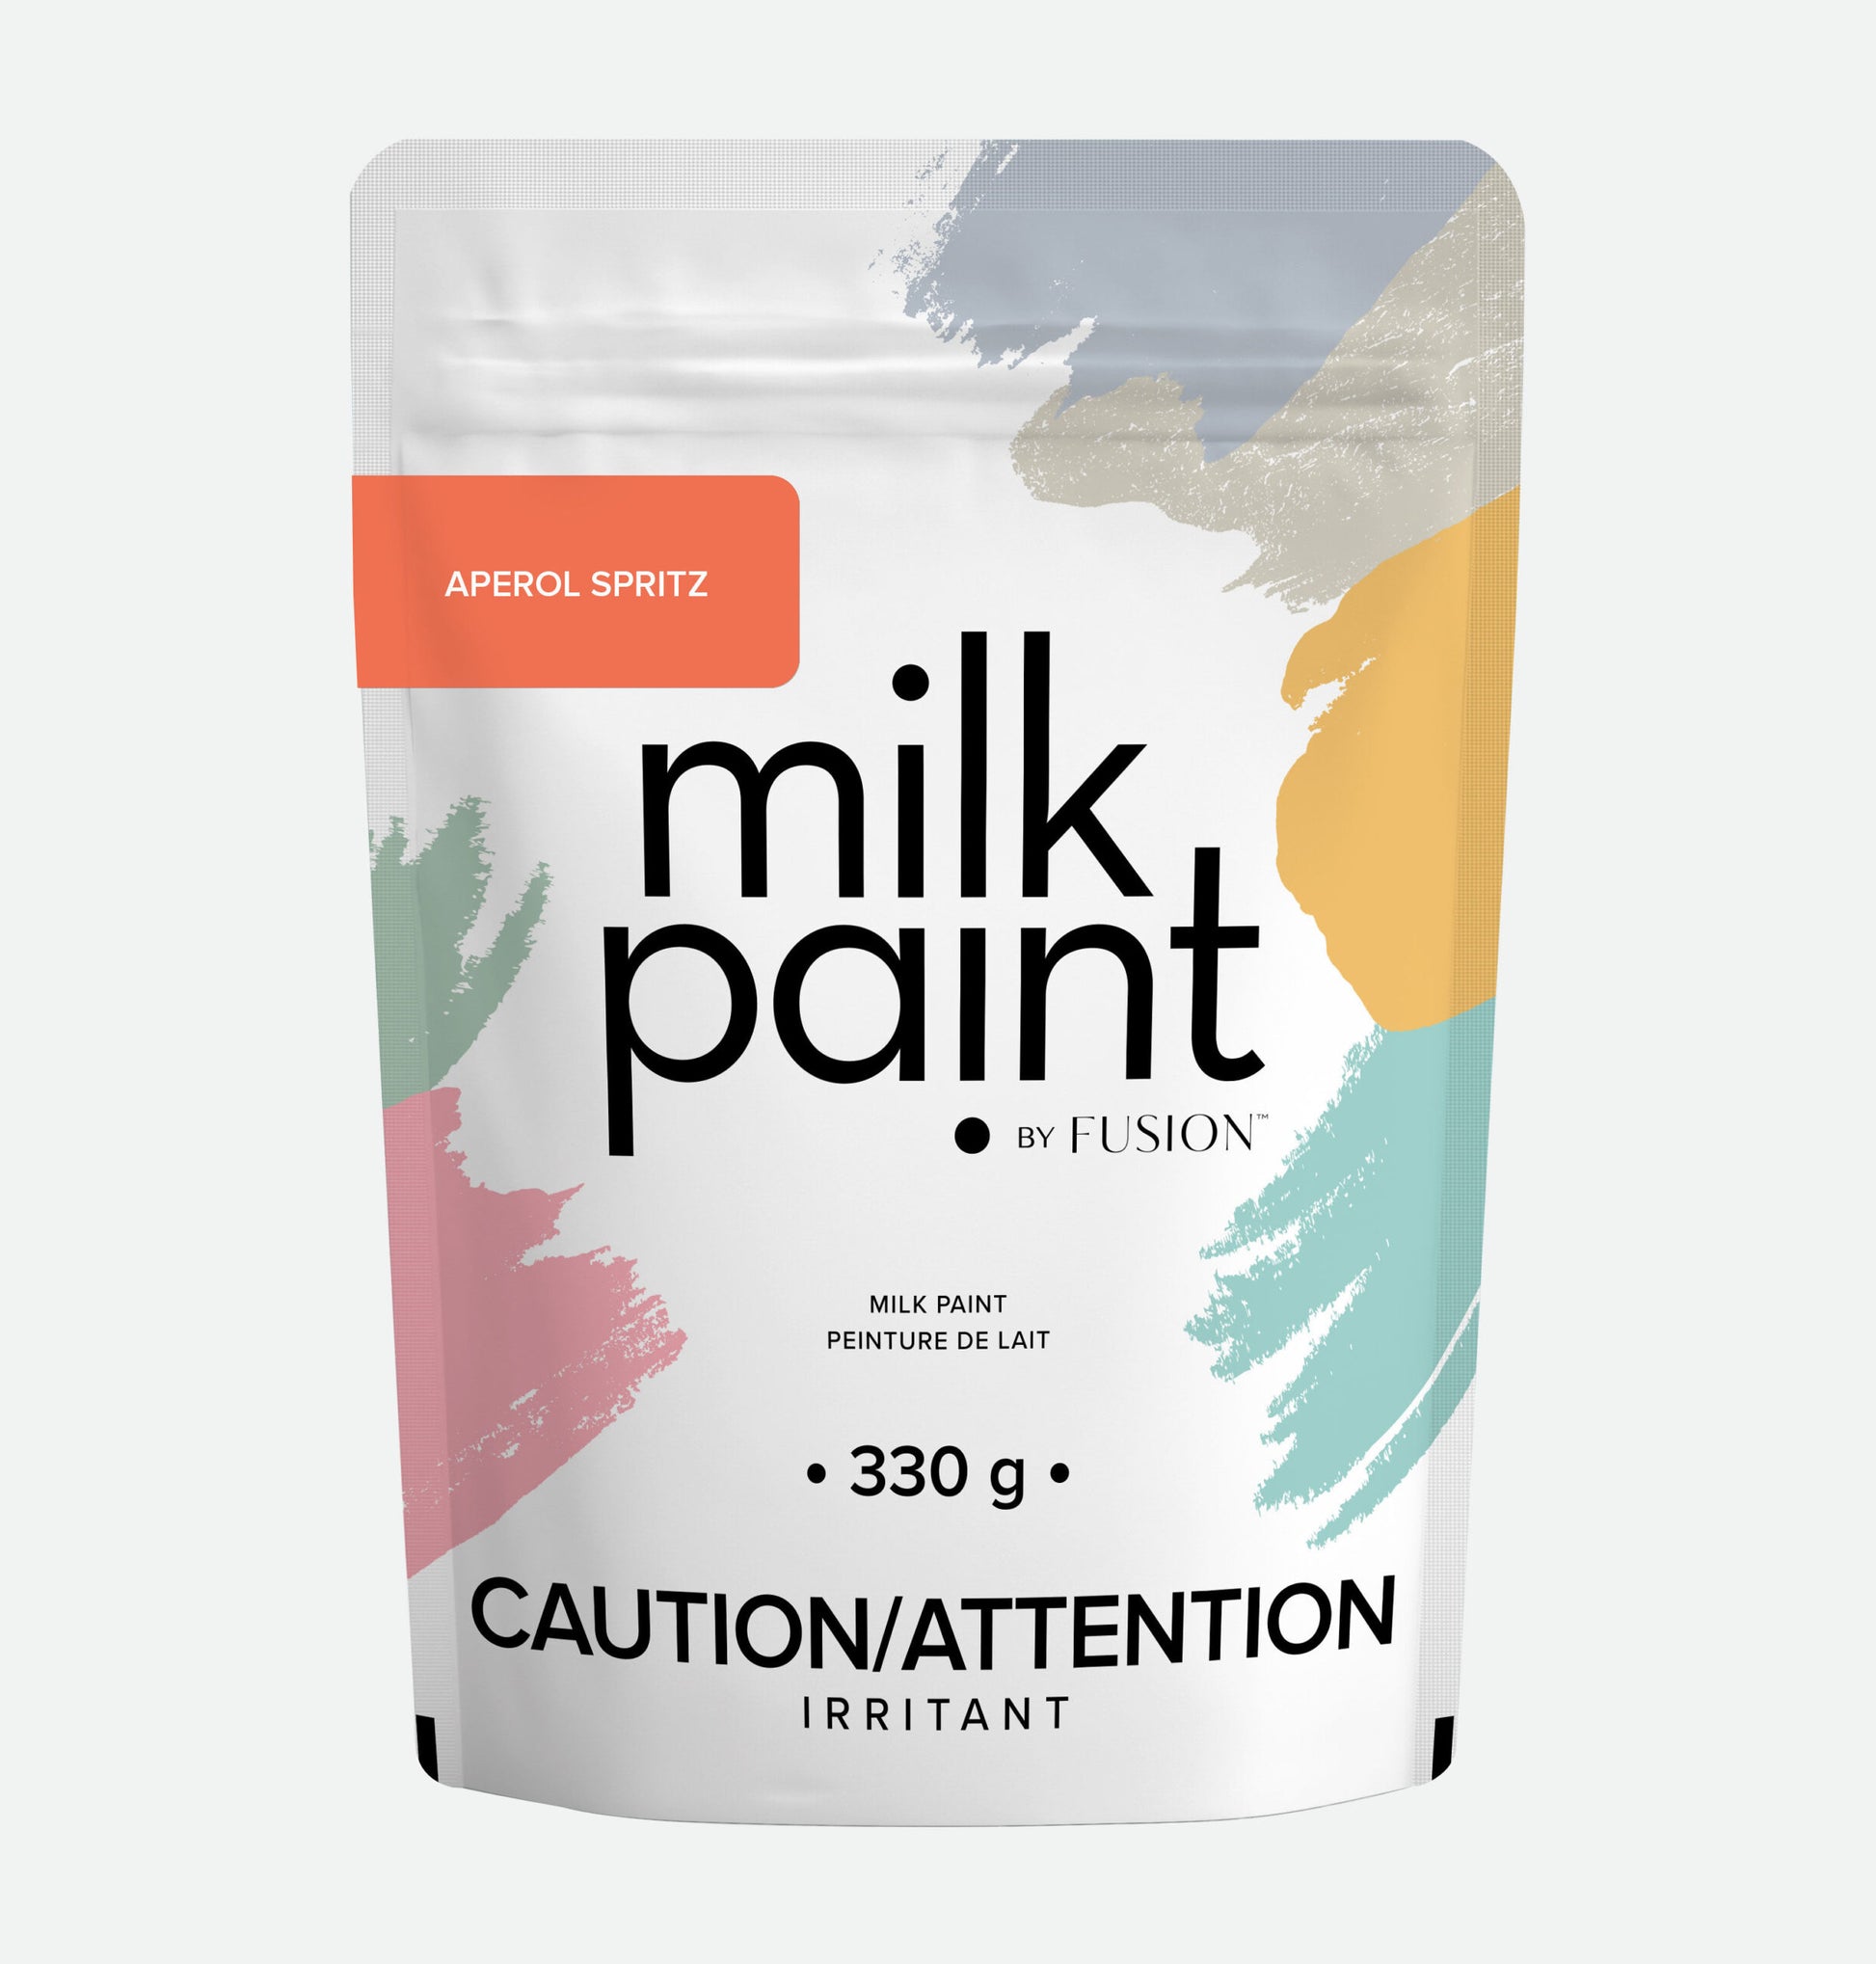 Milk Paint by Fusion - APEROL SPRITZ (New) | milk-paint-by-fusion-aperol-spritz-new | Refinished P/L